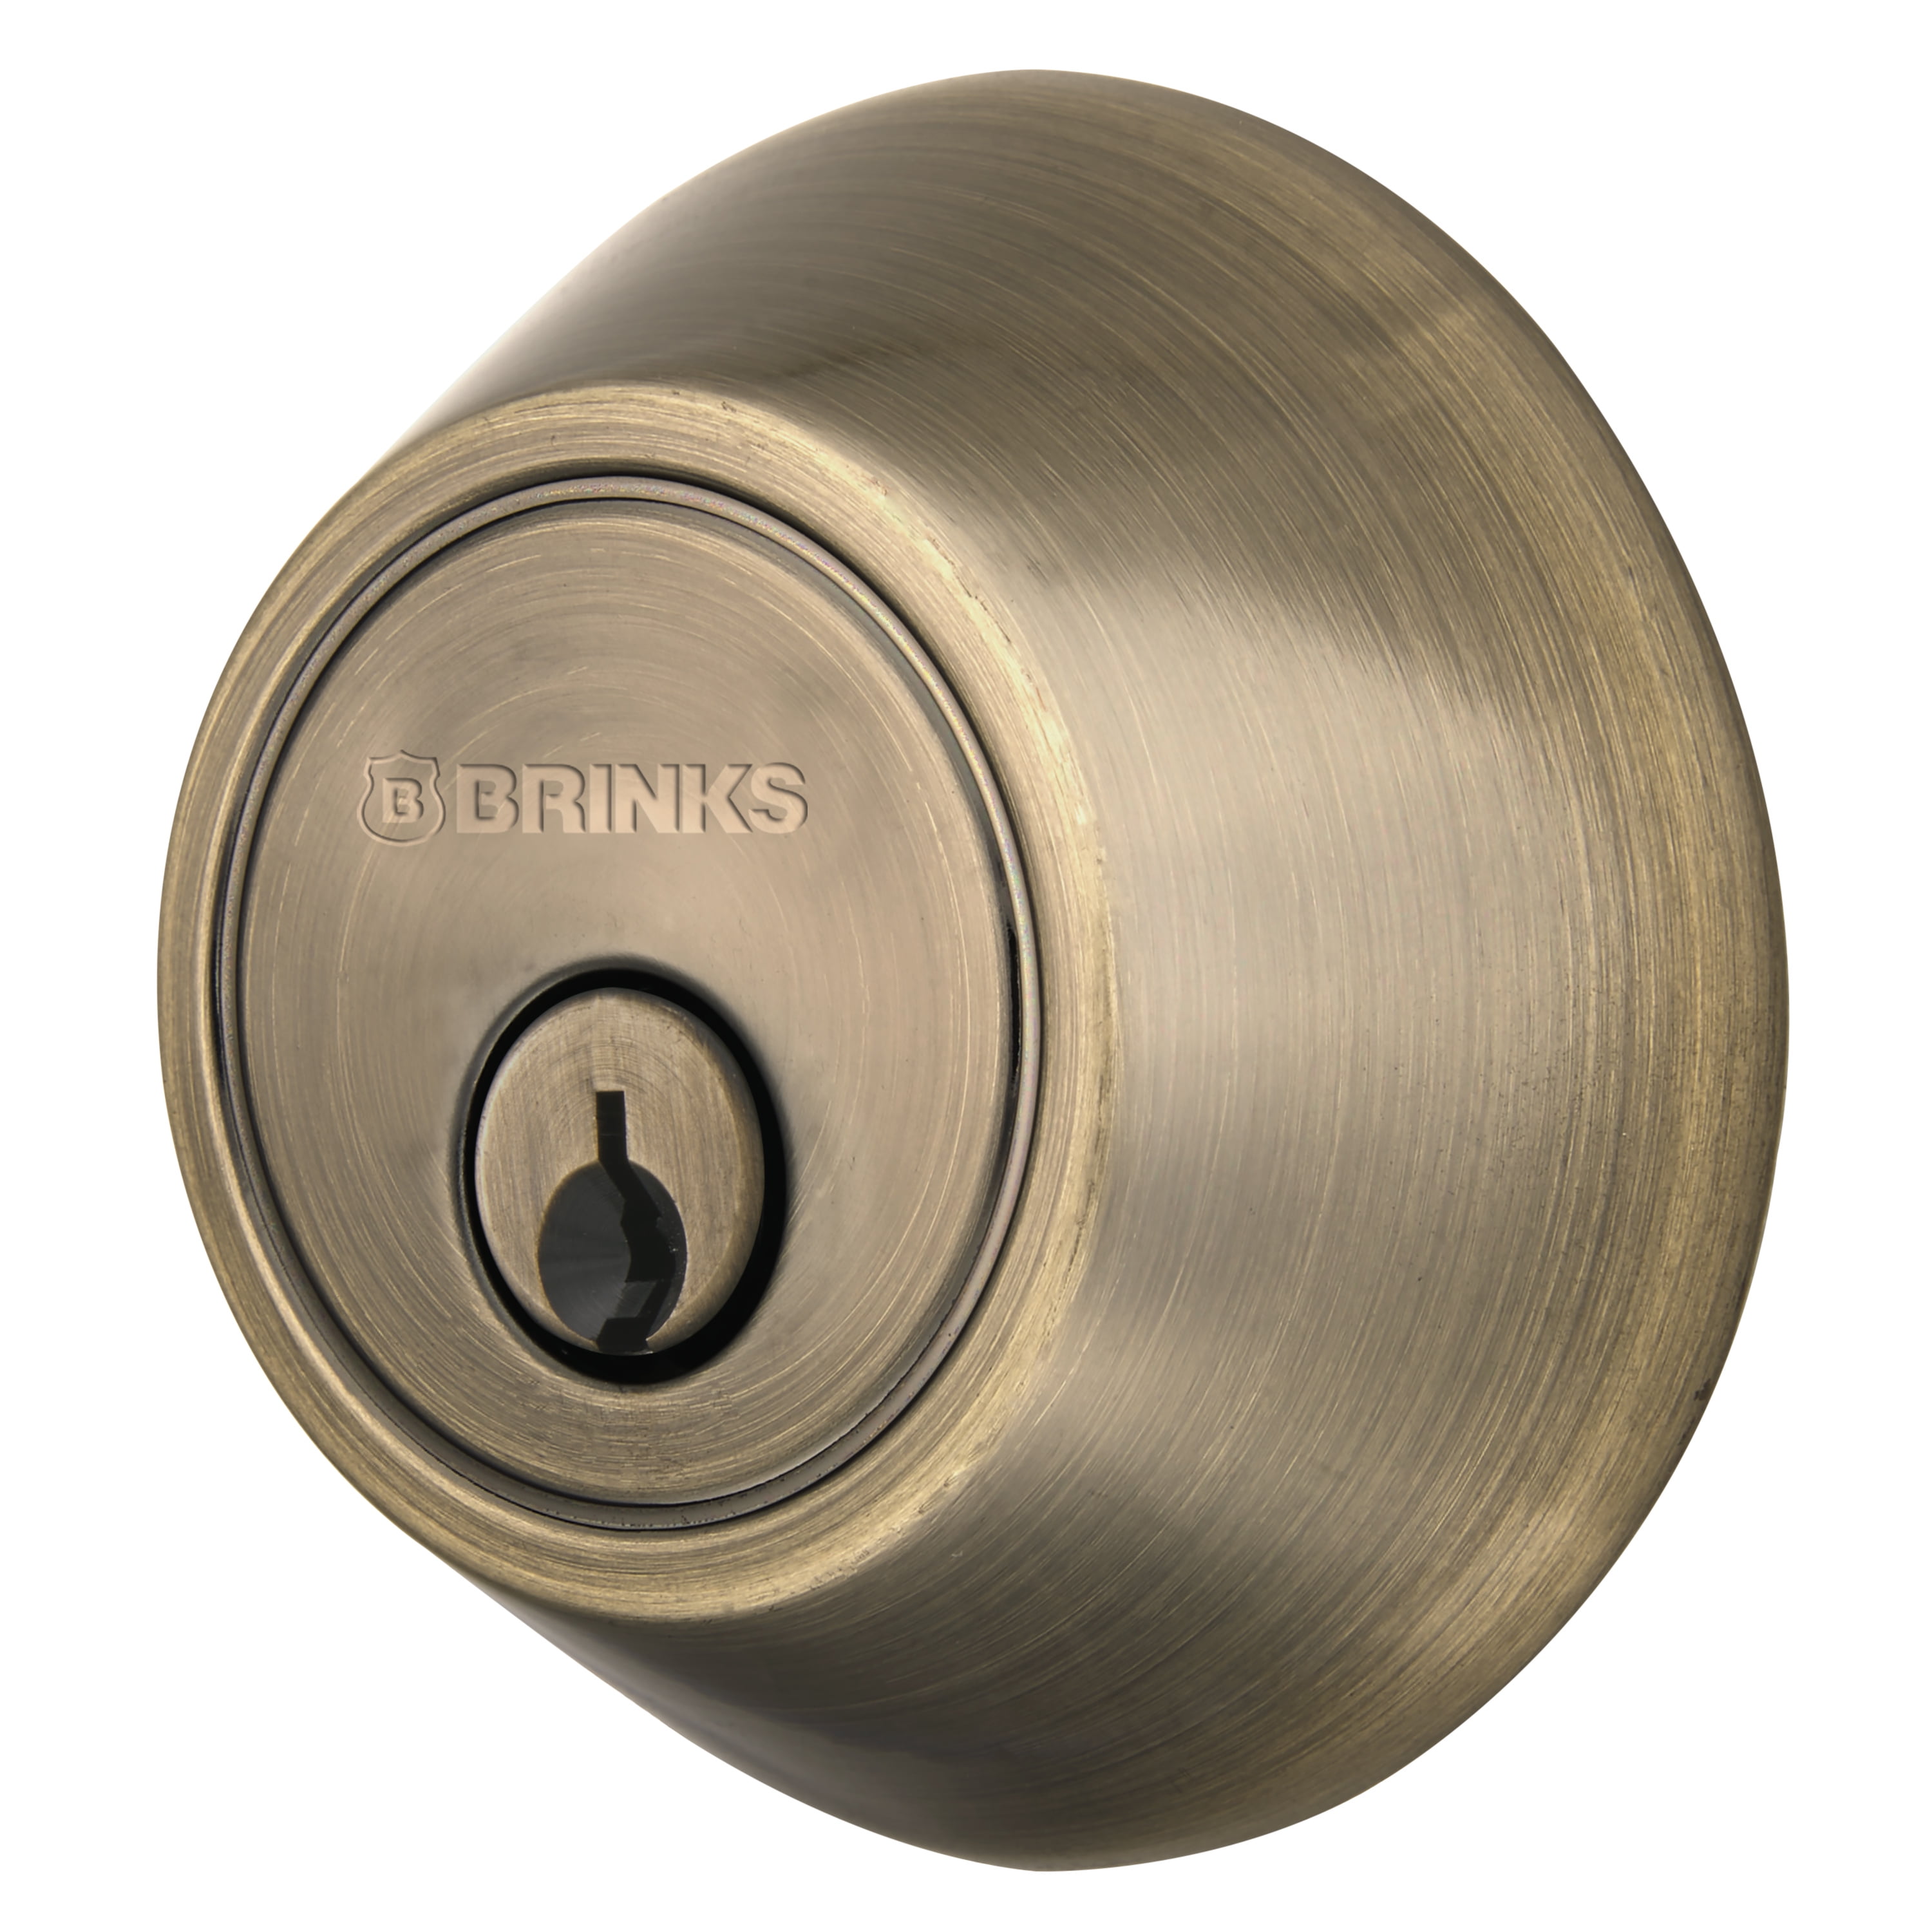 Knape & Vogt Pb1064-us3 KD Keyed Folding Door Lock - Polished Brass, Size: One Size